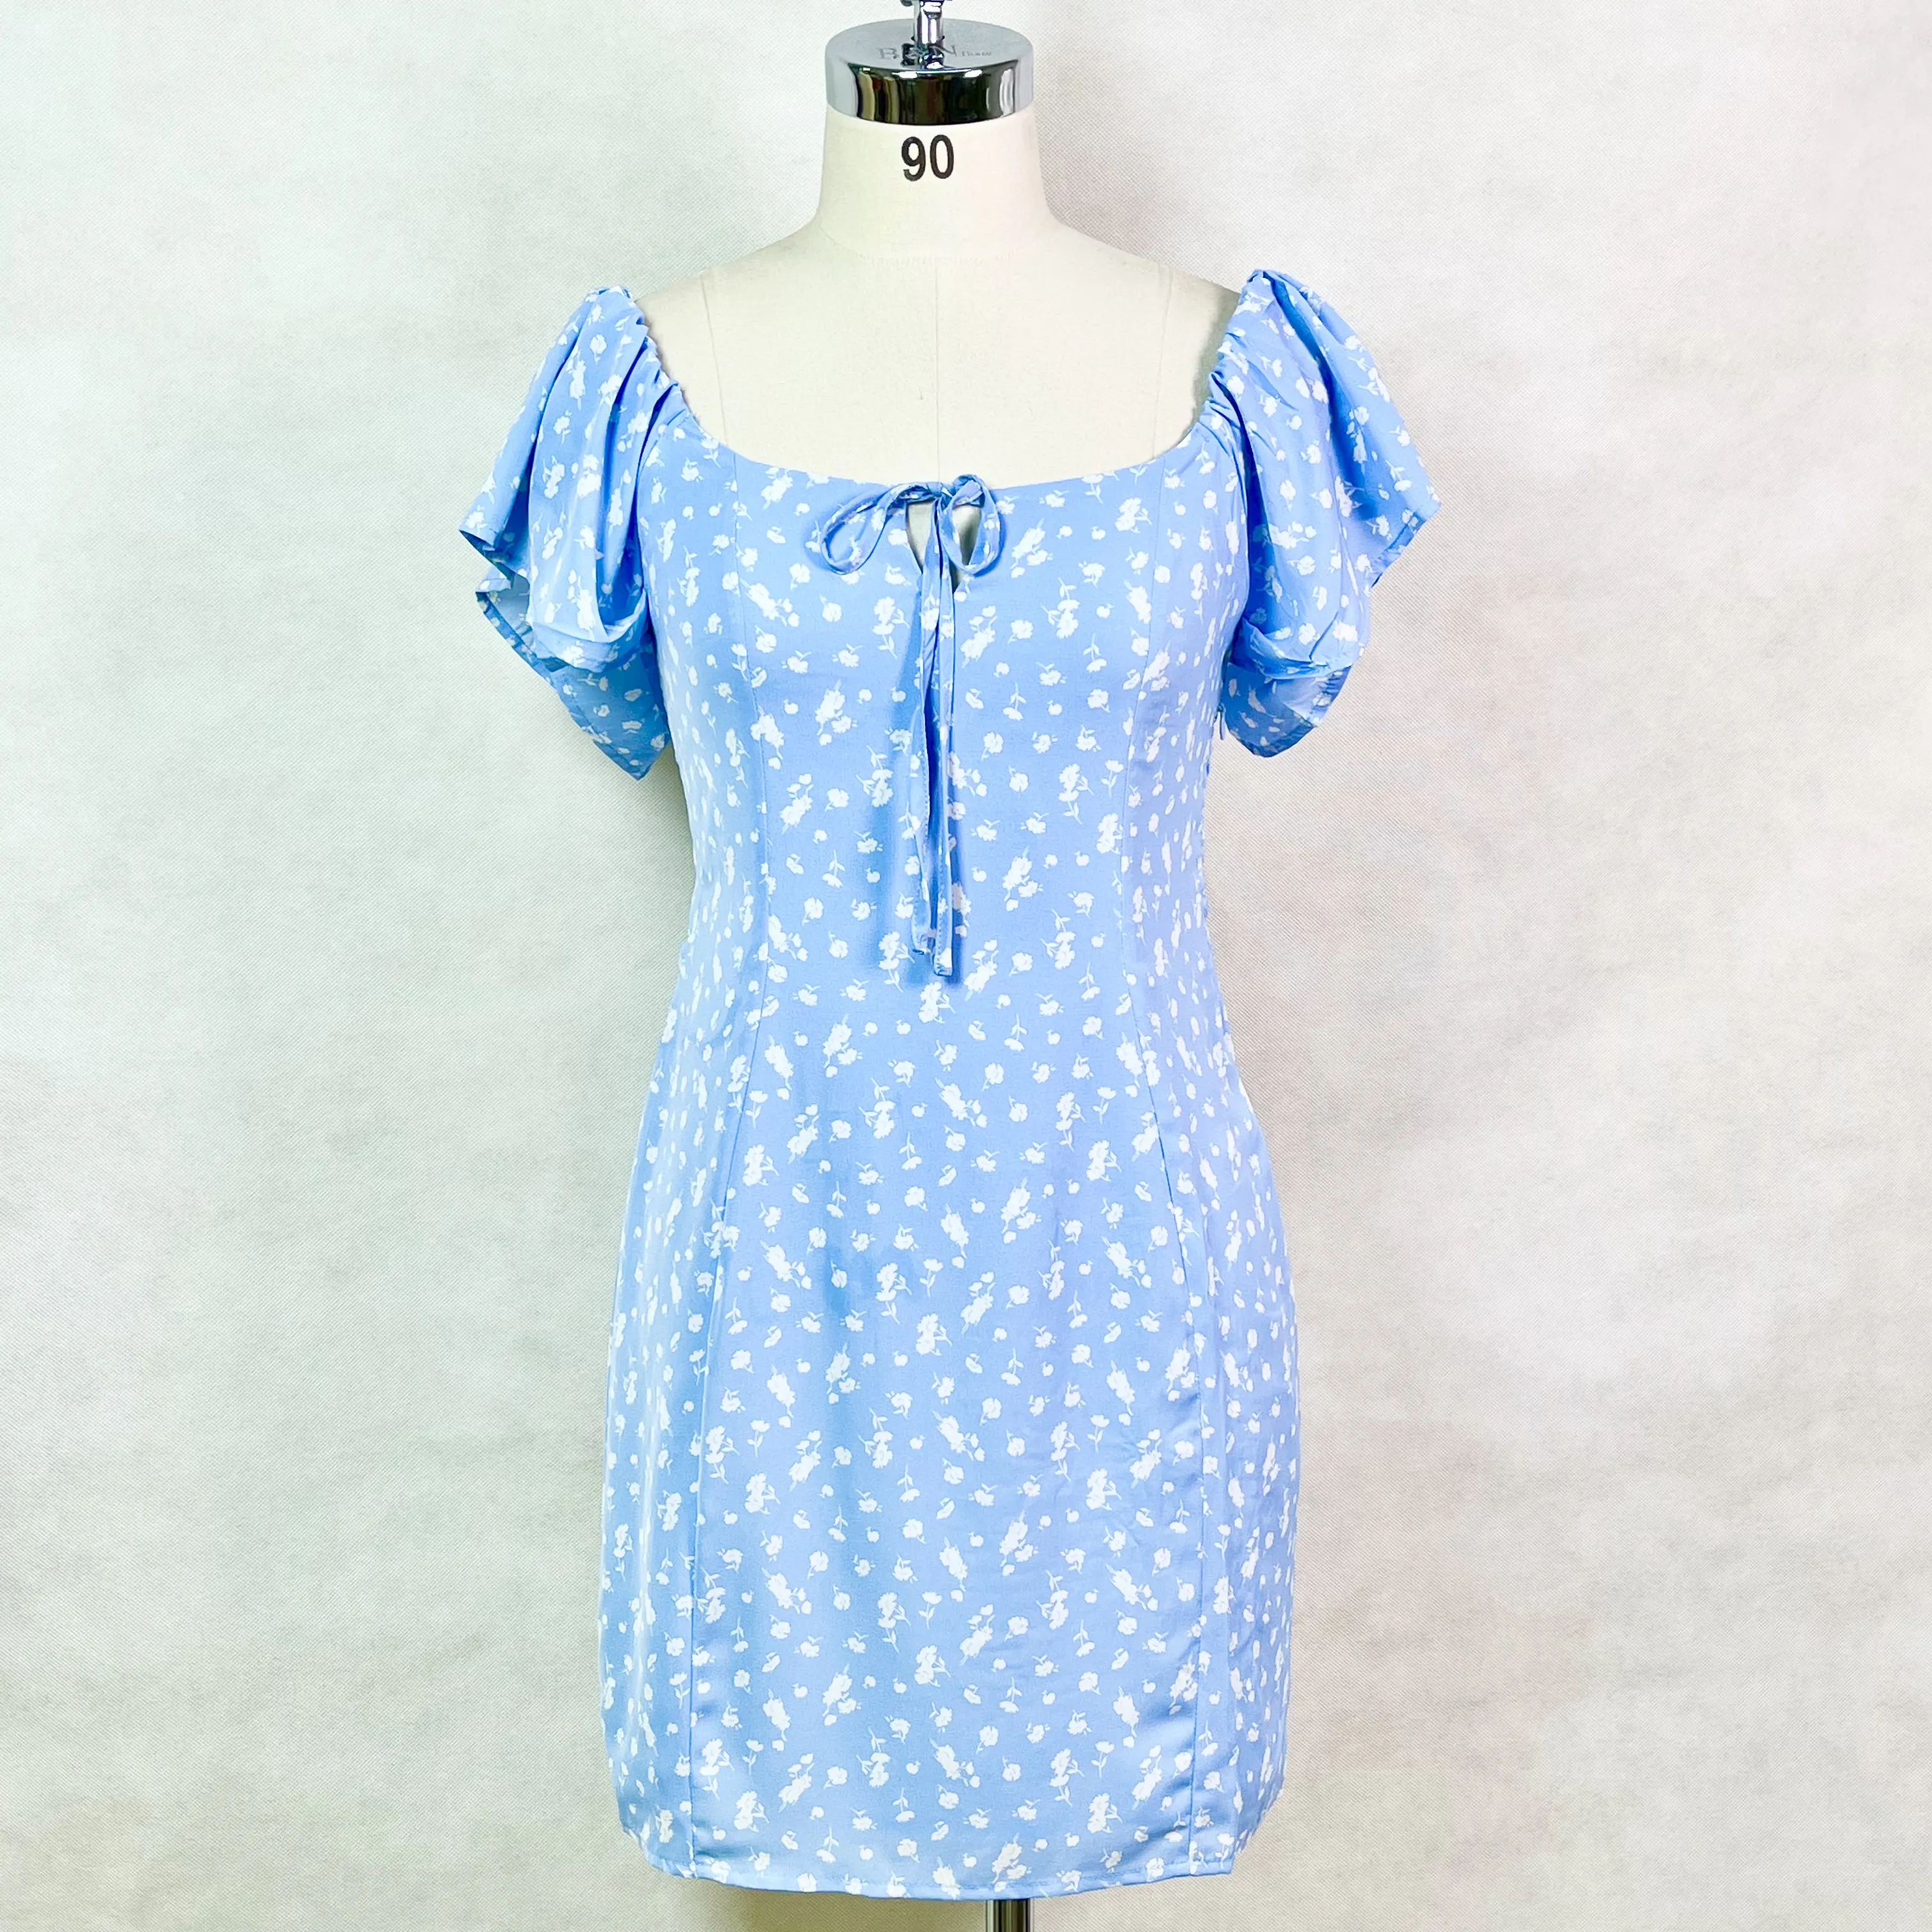 Low MOQ Stock Goods Ready to Ship Ruffled Short Sleeve Floral Print Chiffon Beach Dresses Casual Mini Party Dress